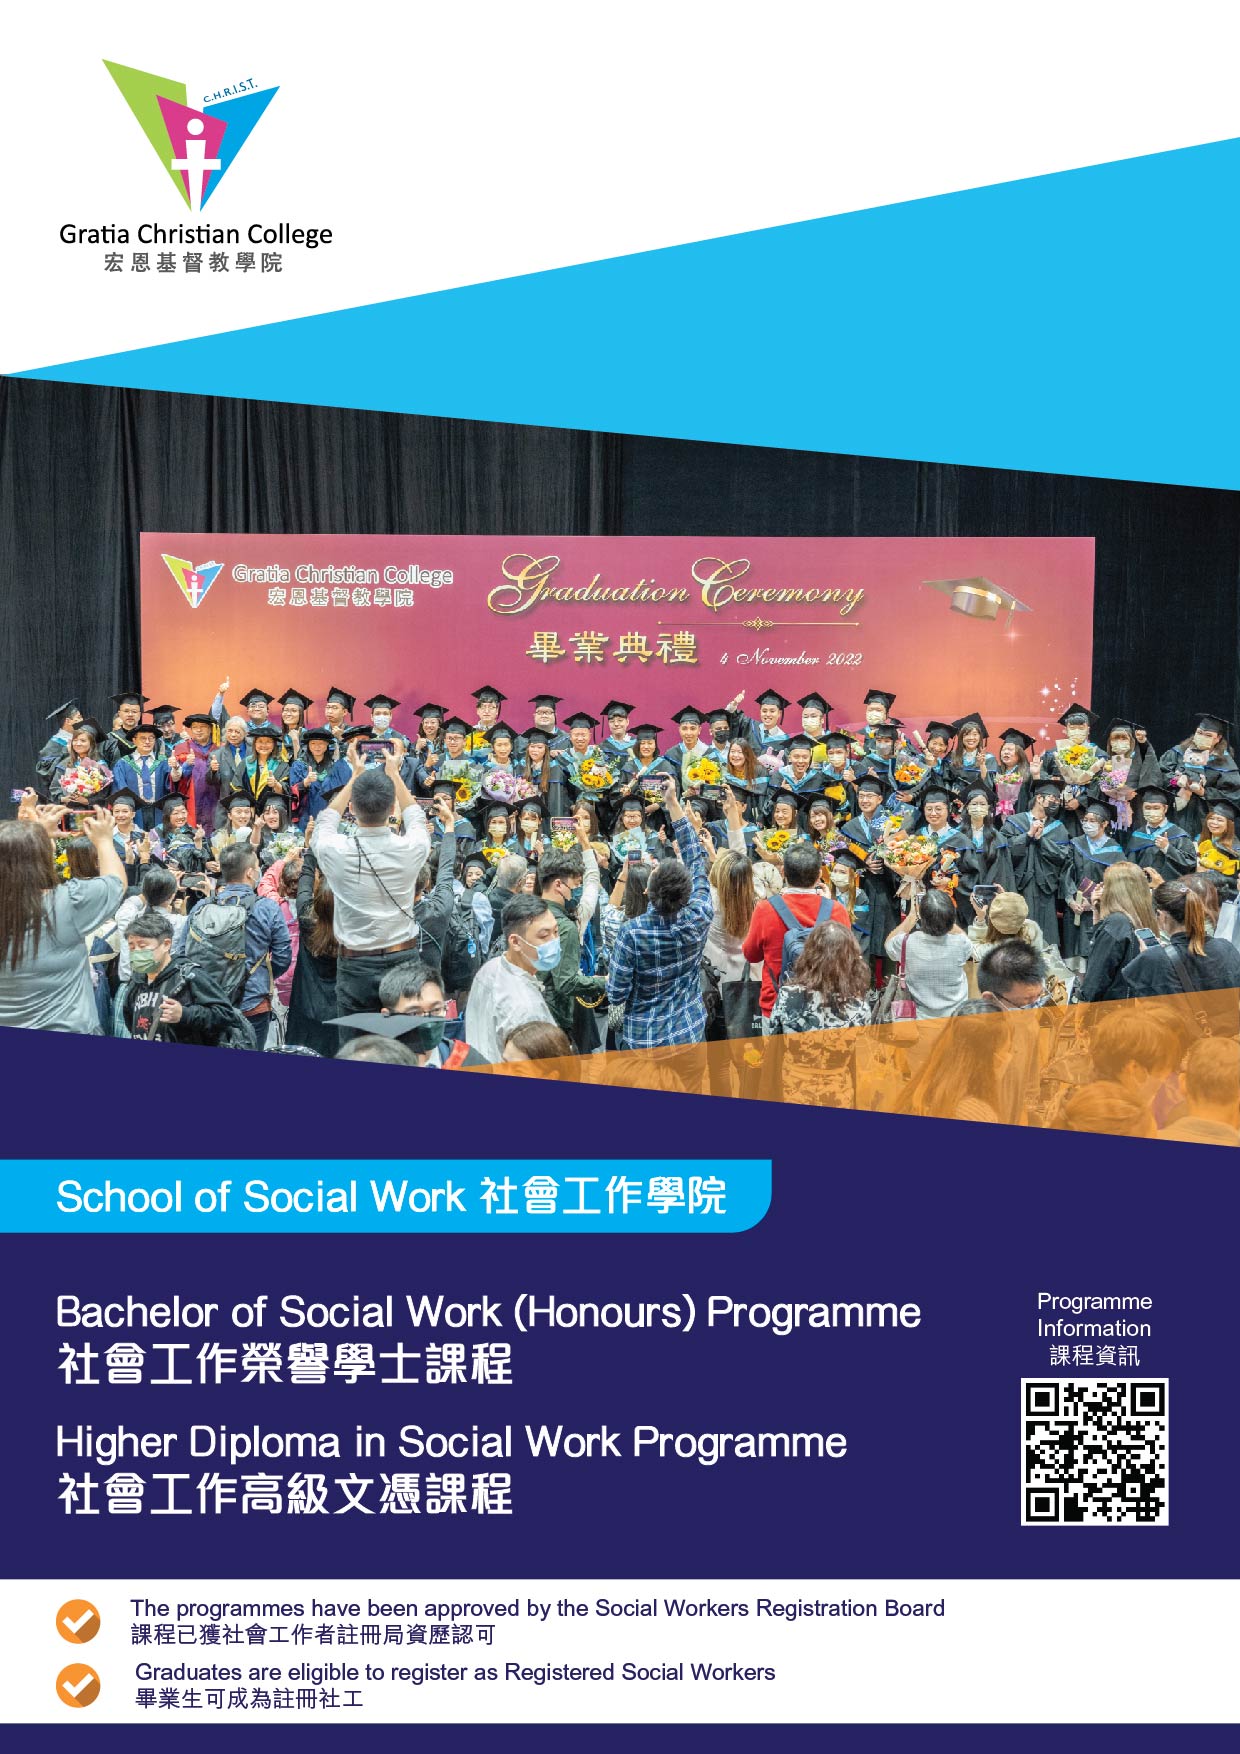 School of Social Work Leaflet